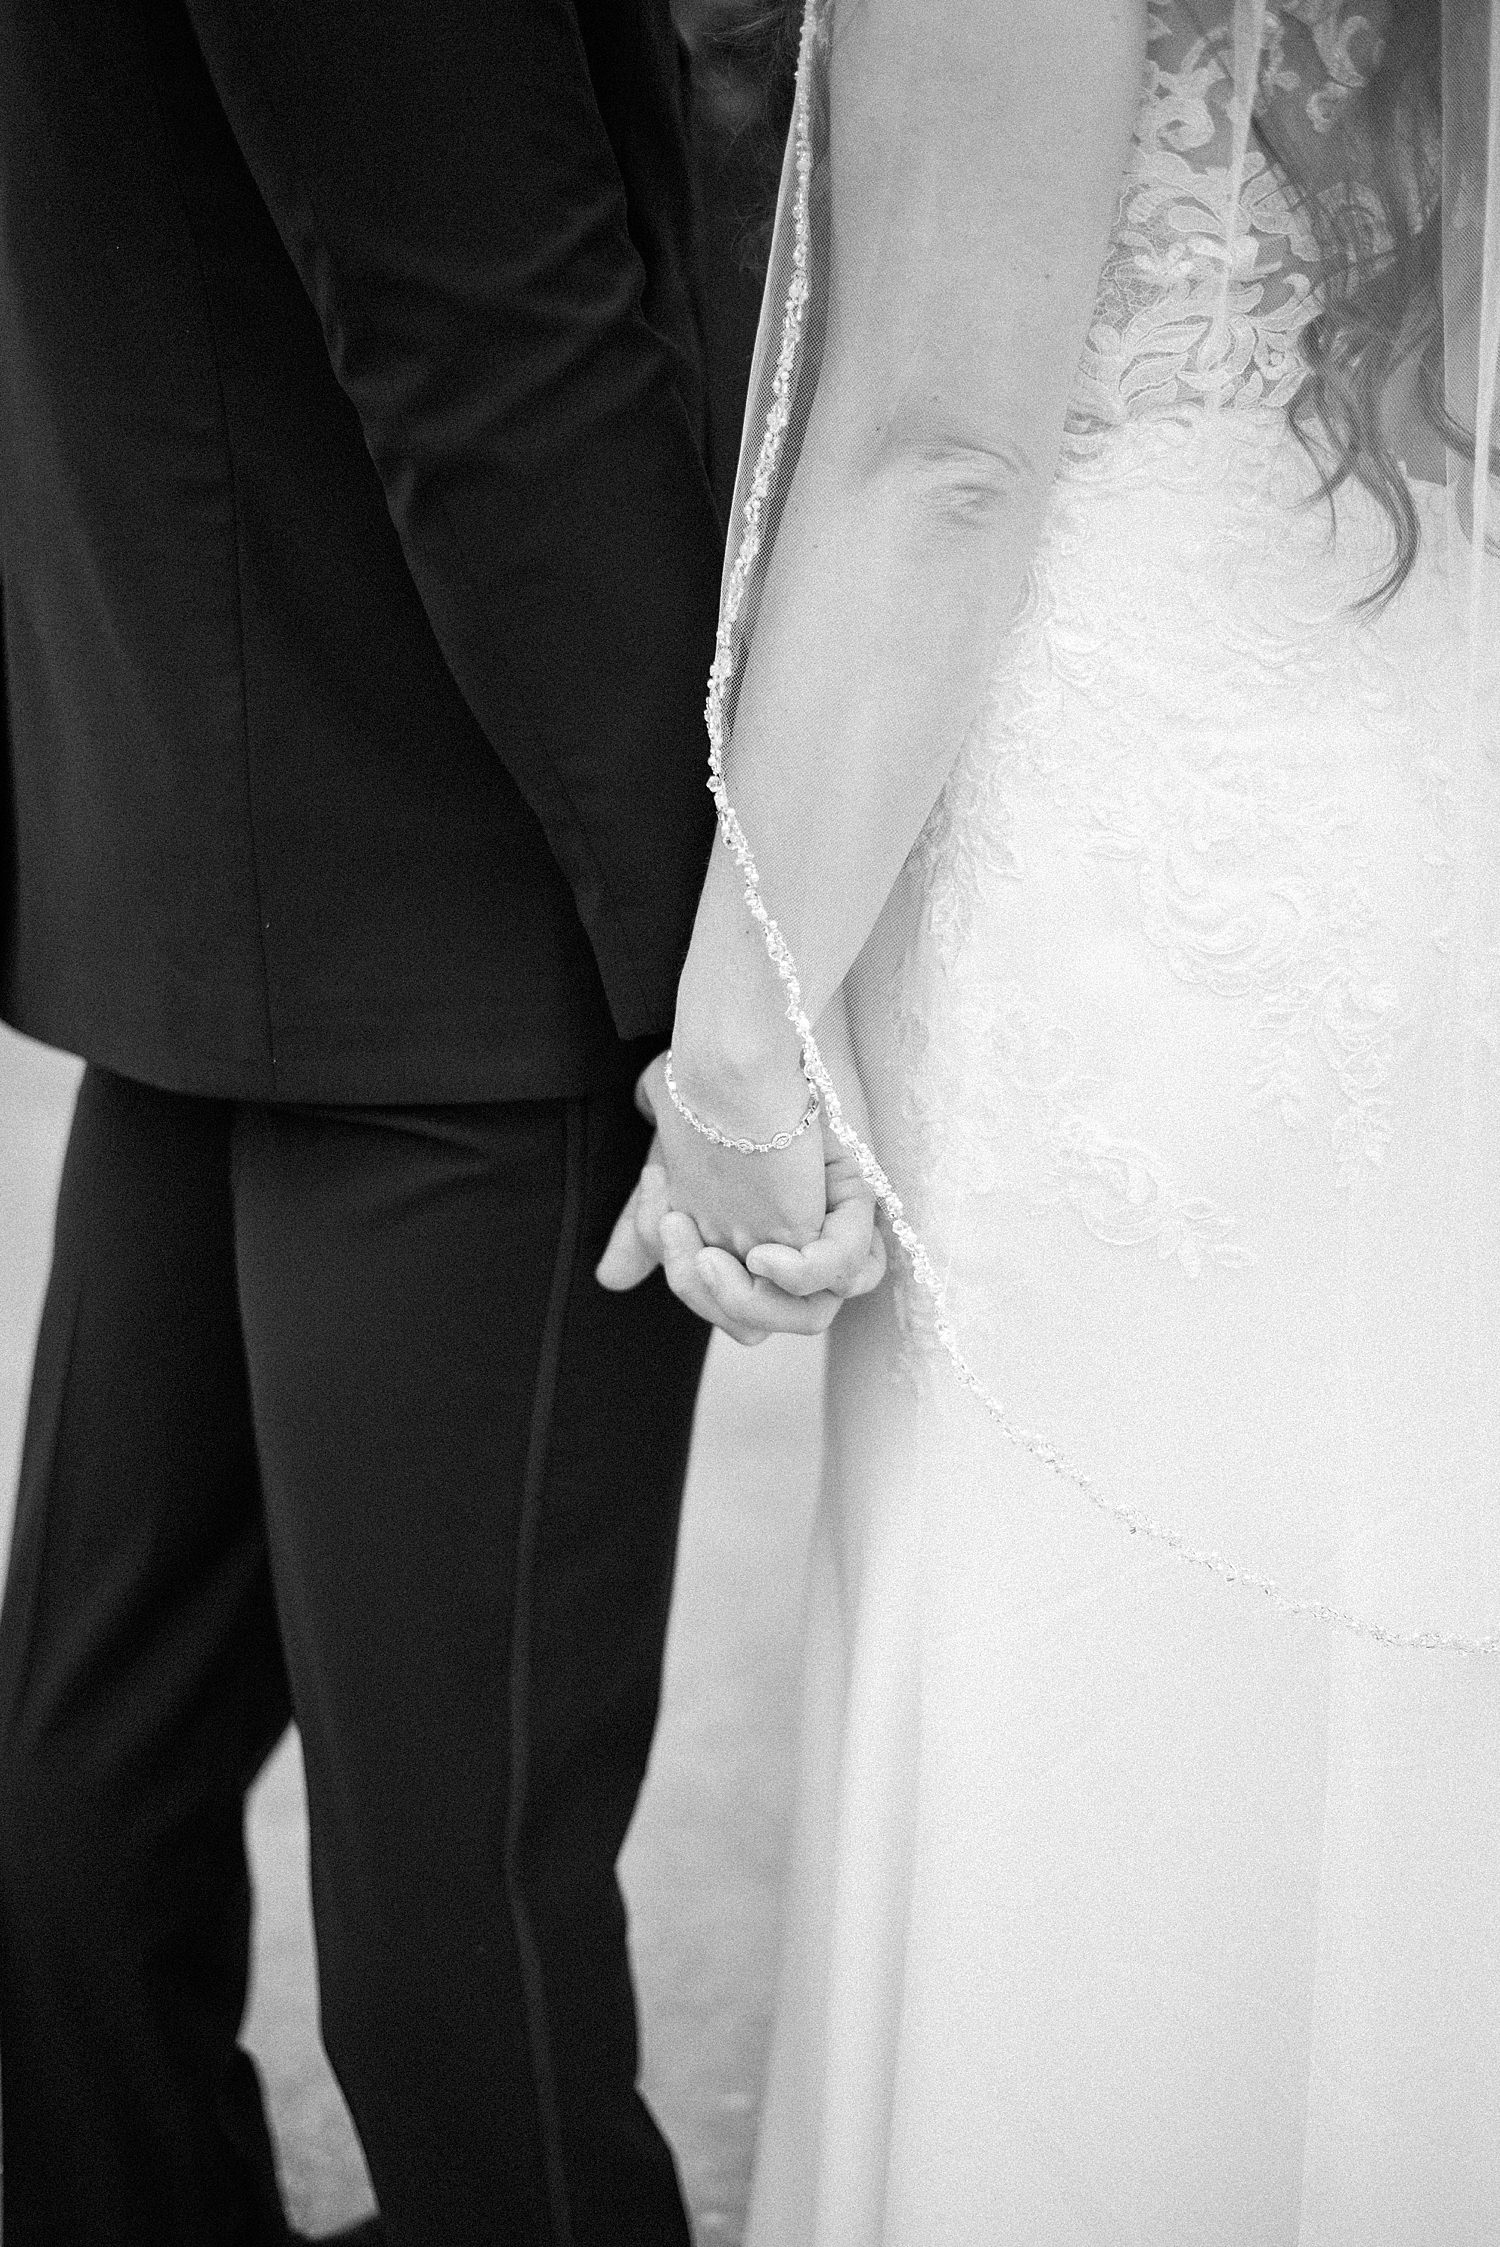 newlyweds hold hands during FL wedding photos 